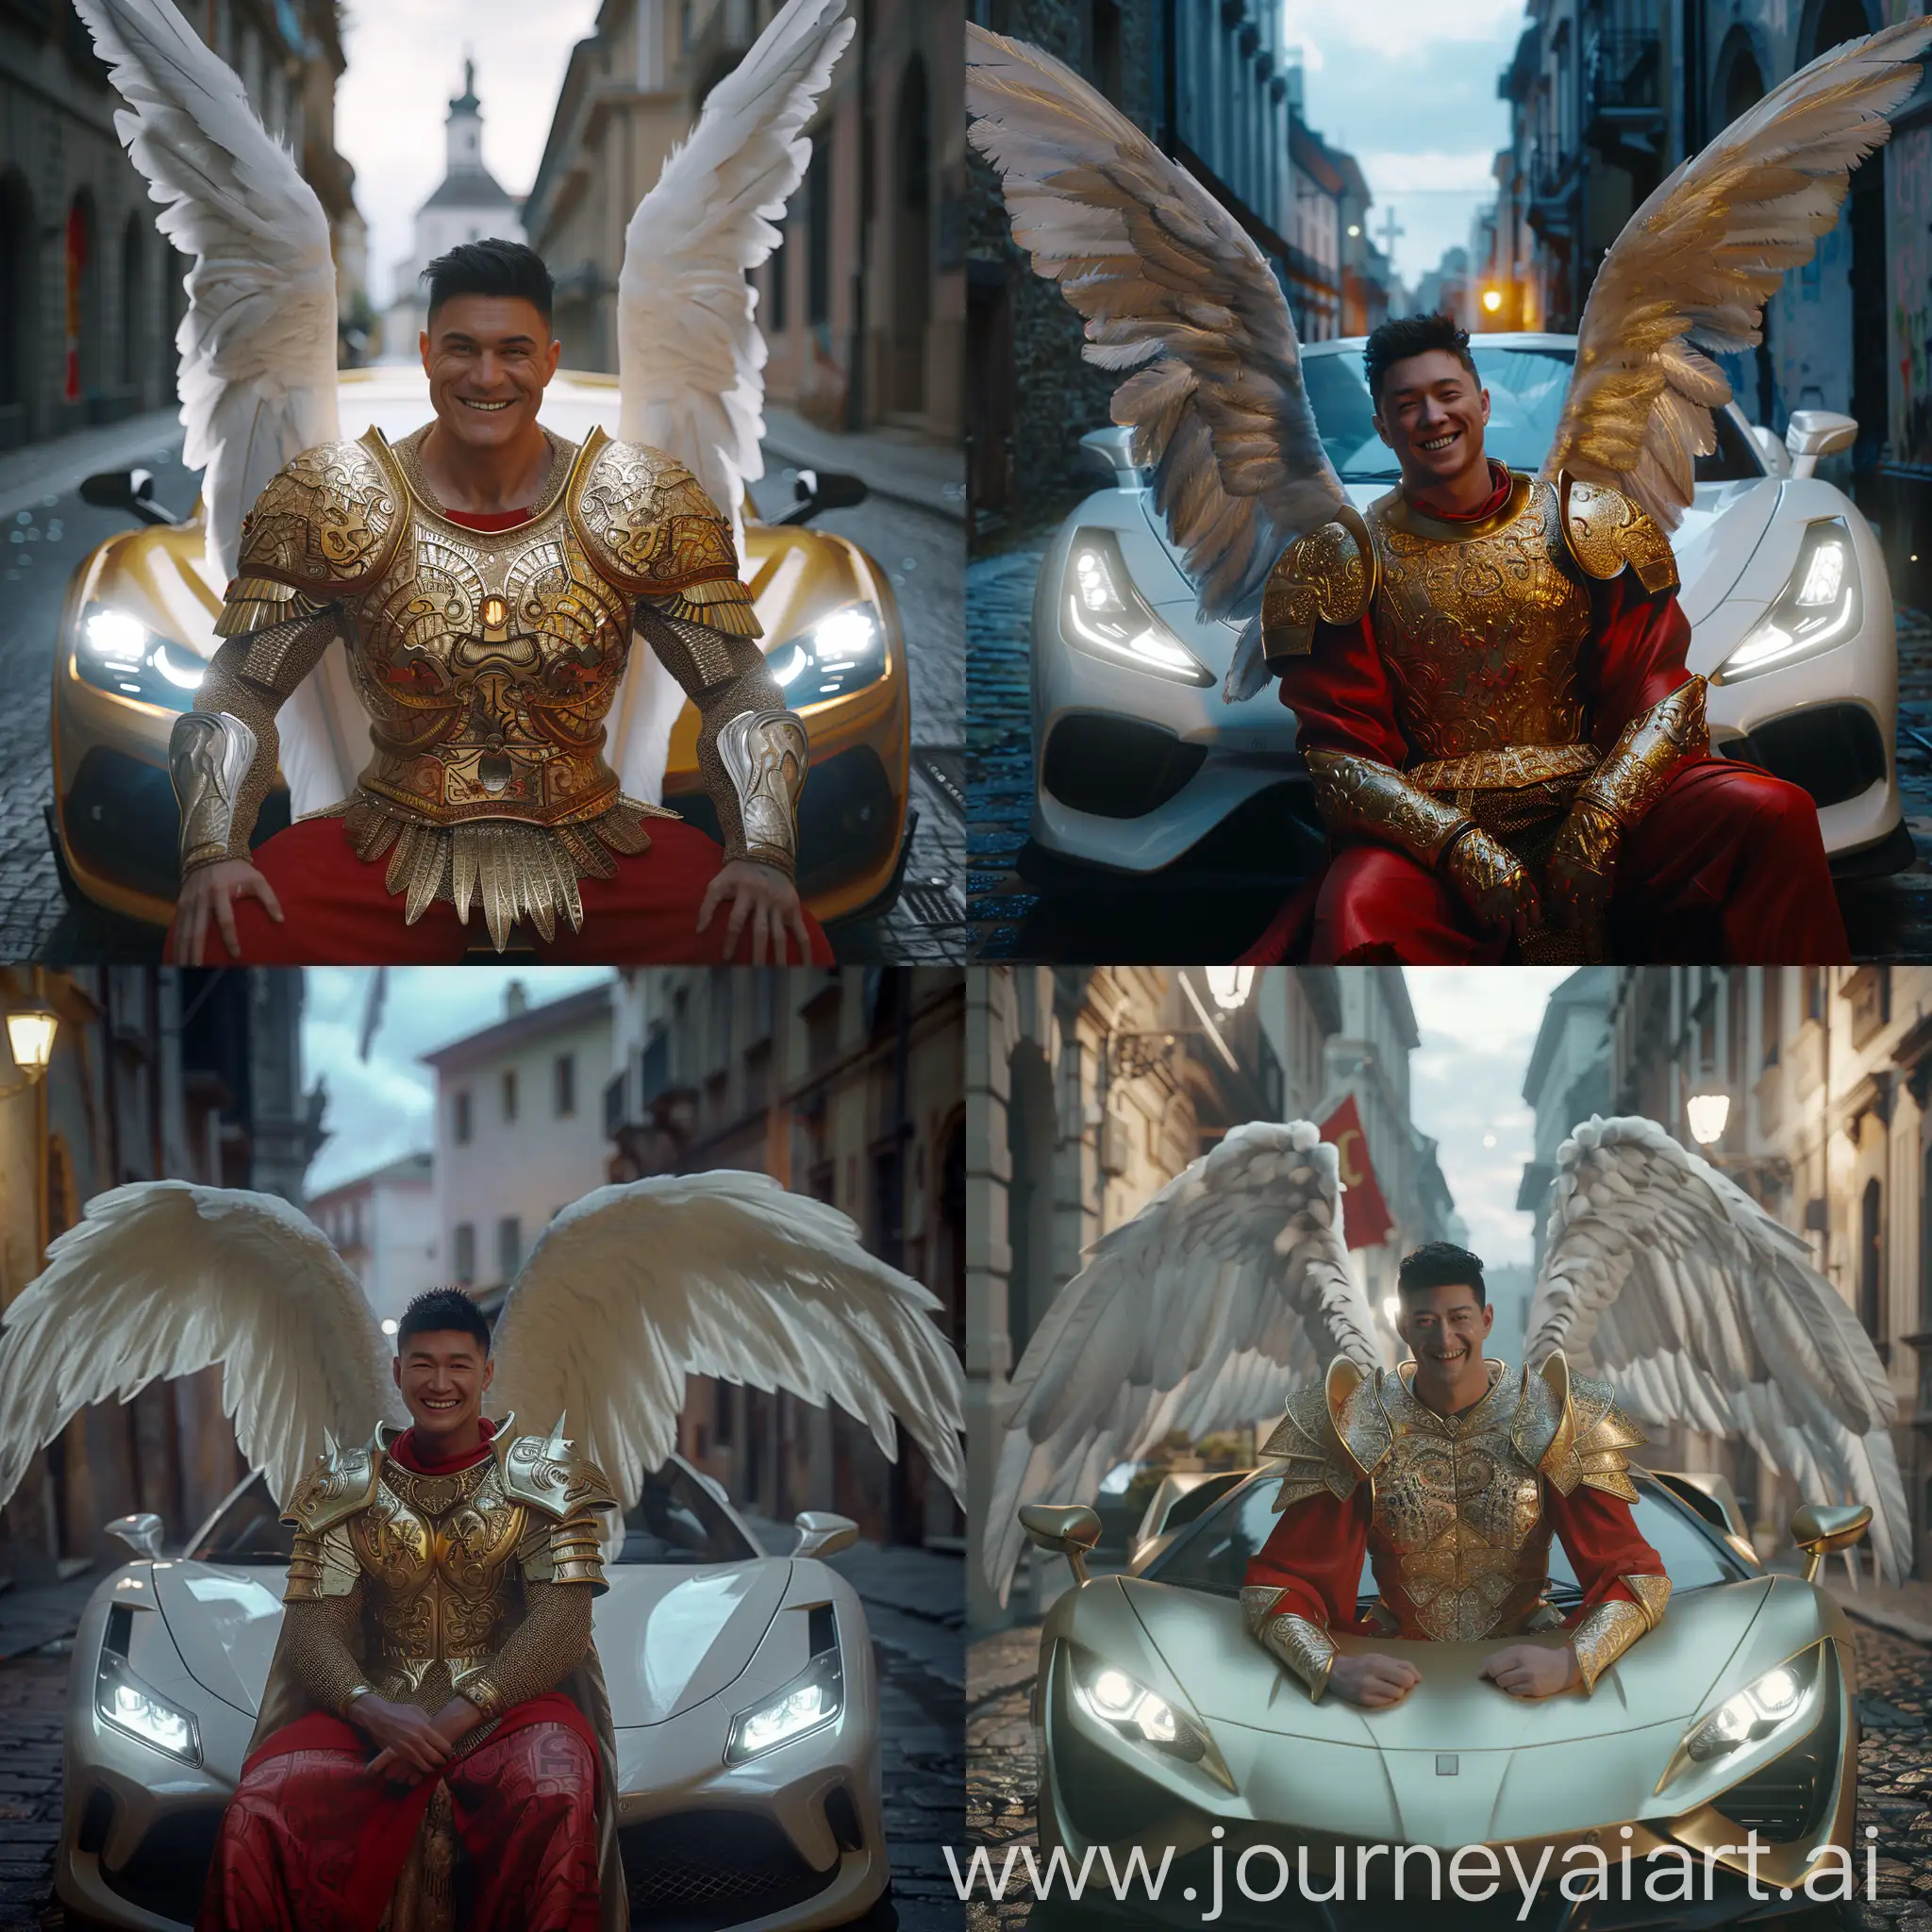 Archangel-in-Golden-Armor-Smiling-on-Sports-Car-in-Raw-Style-Scene